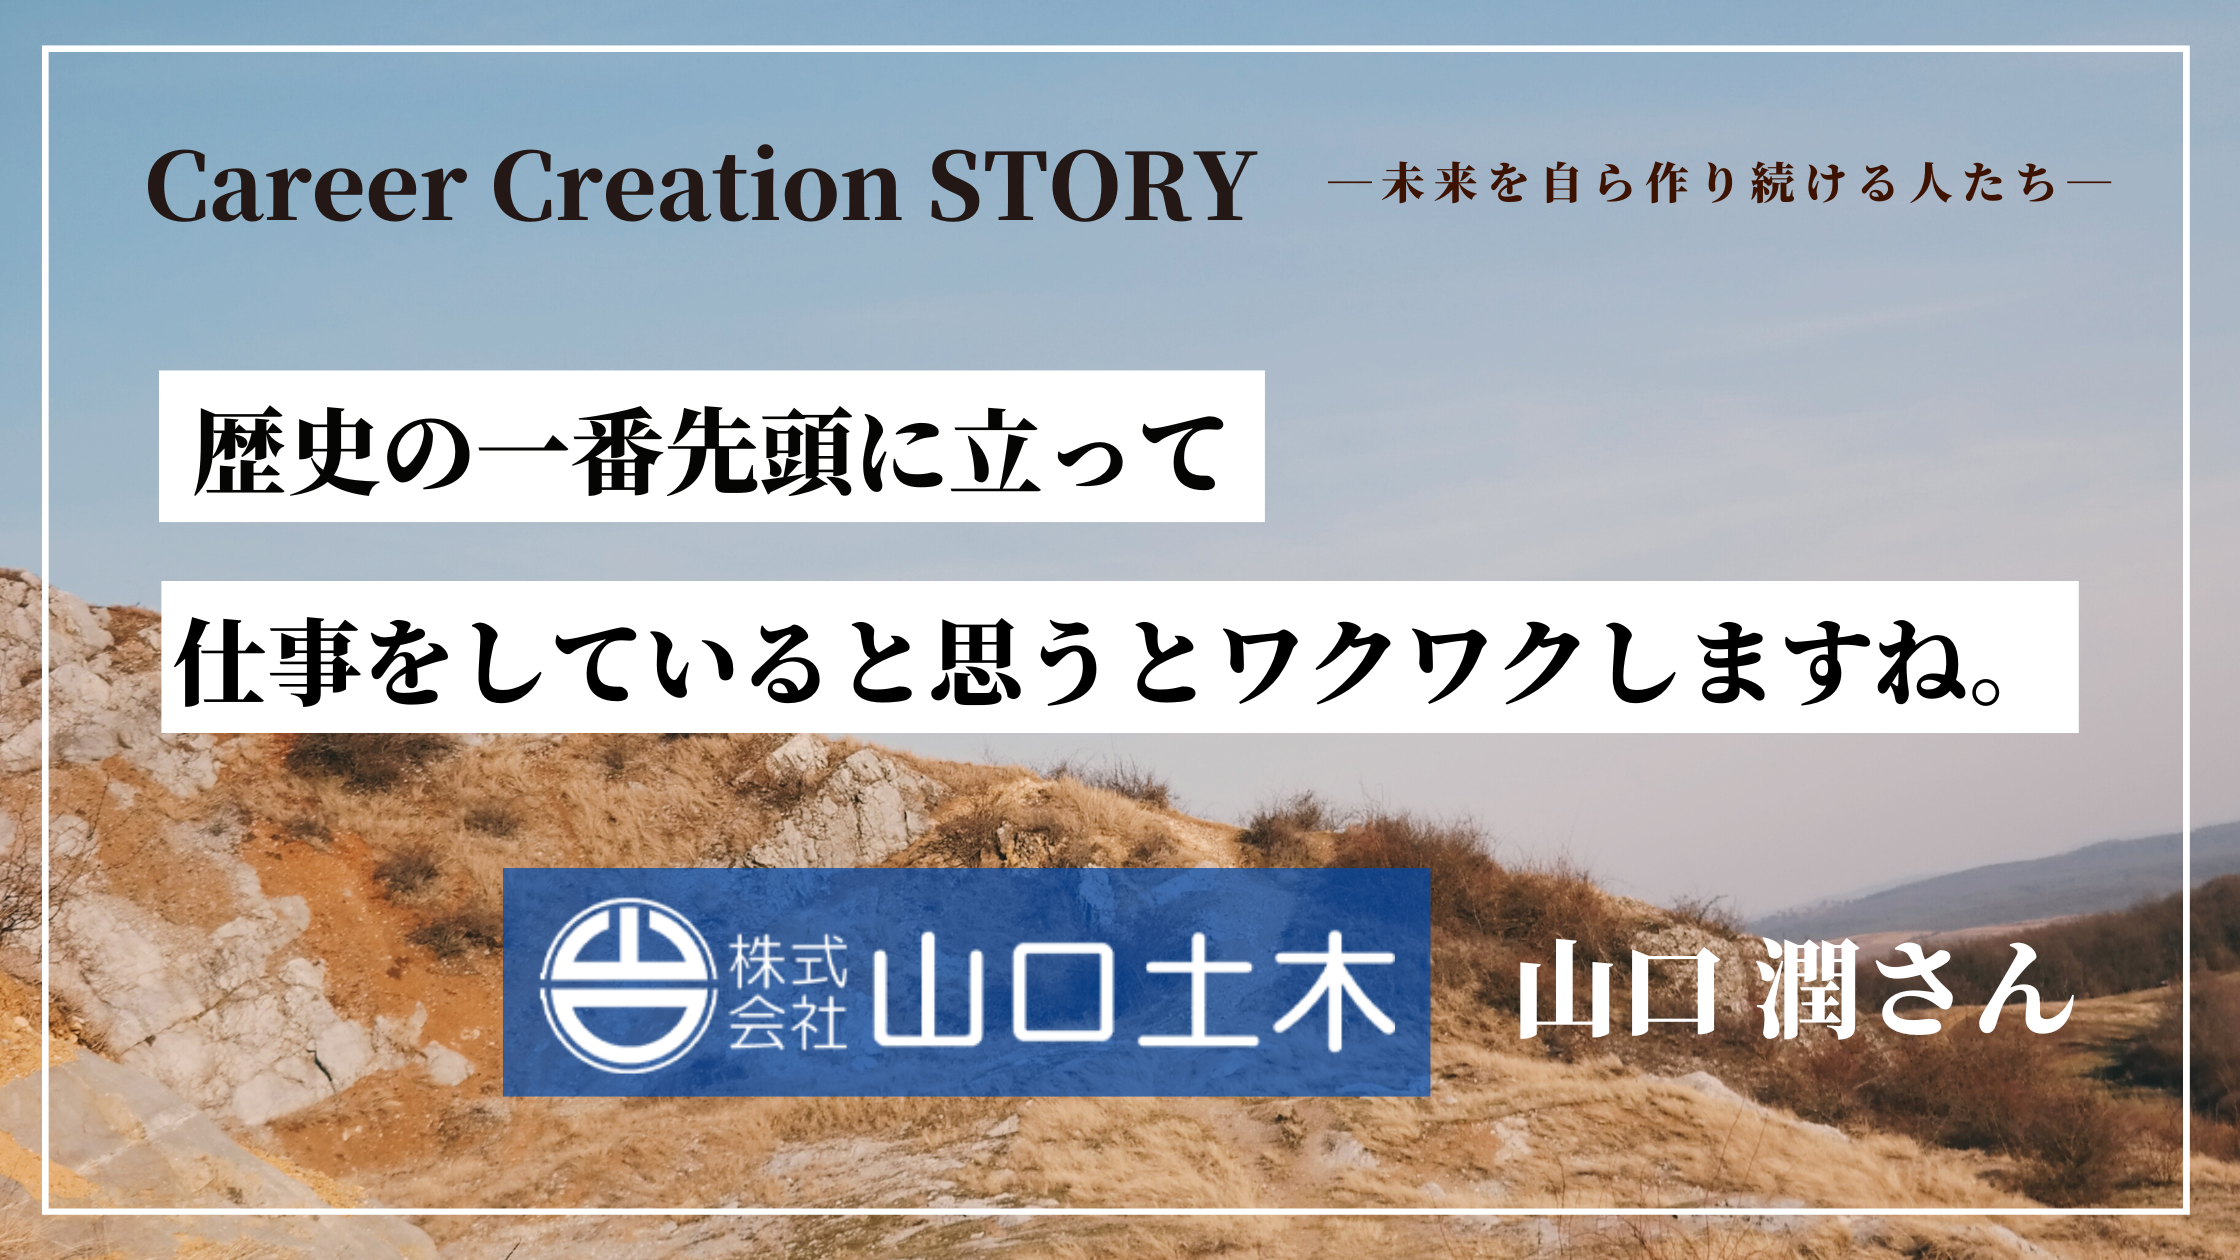 Career Creation STORY #13：ヤマト運輸（株）宮本一輝さん